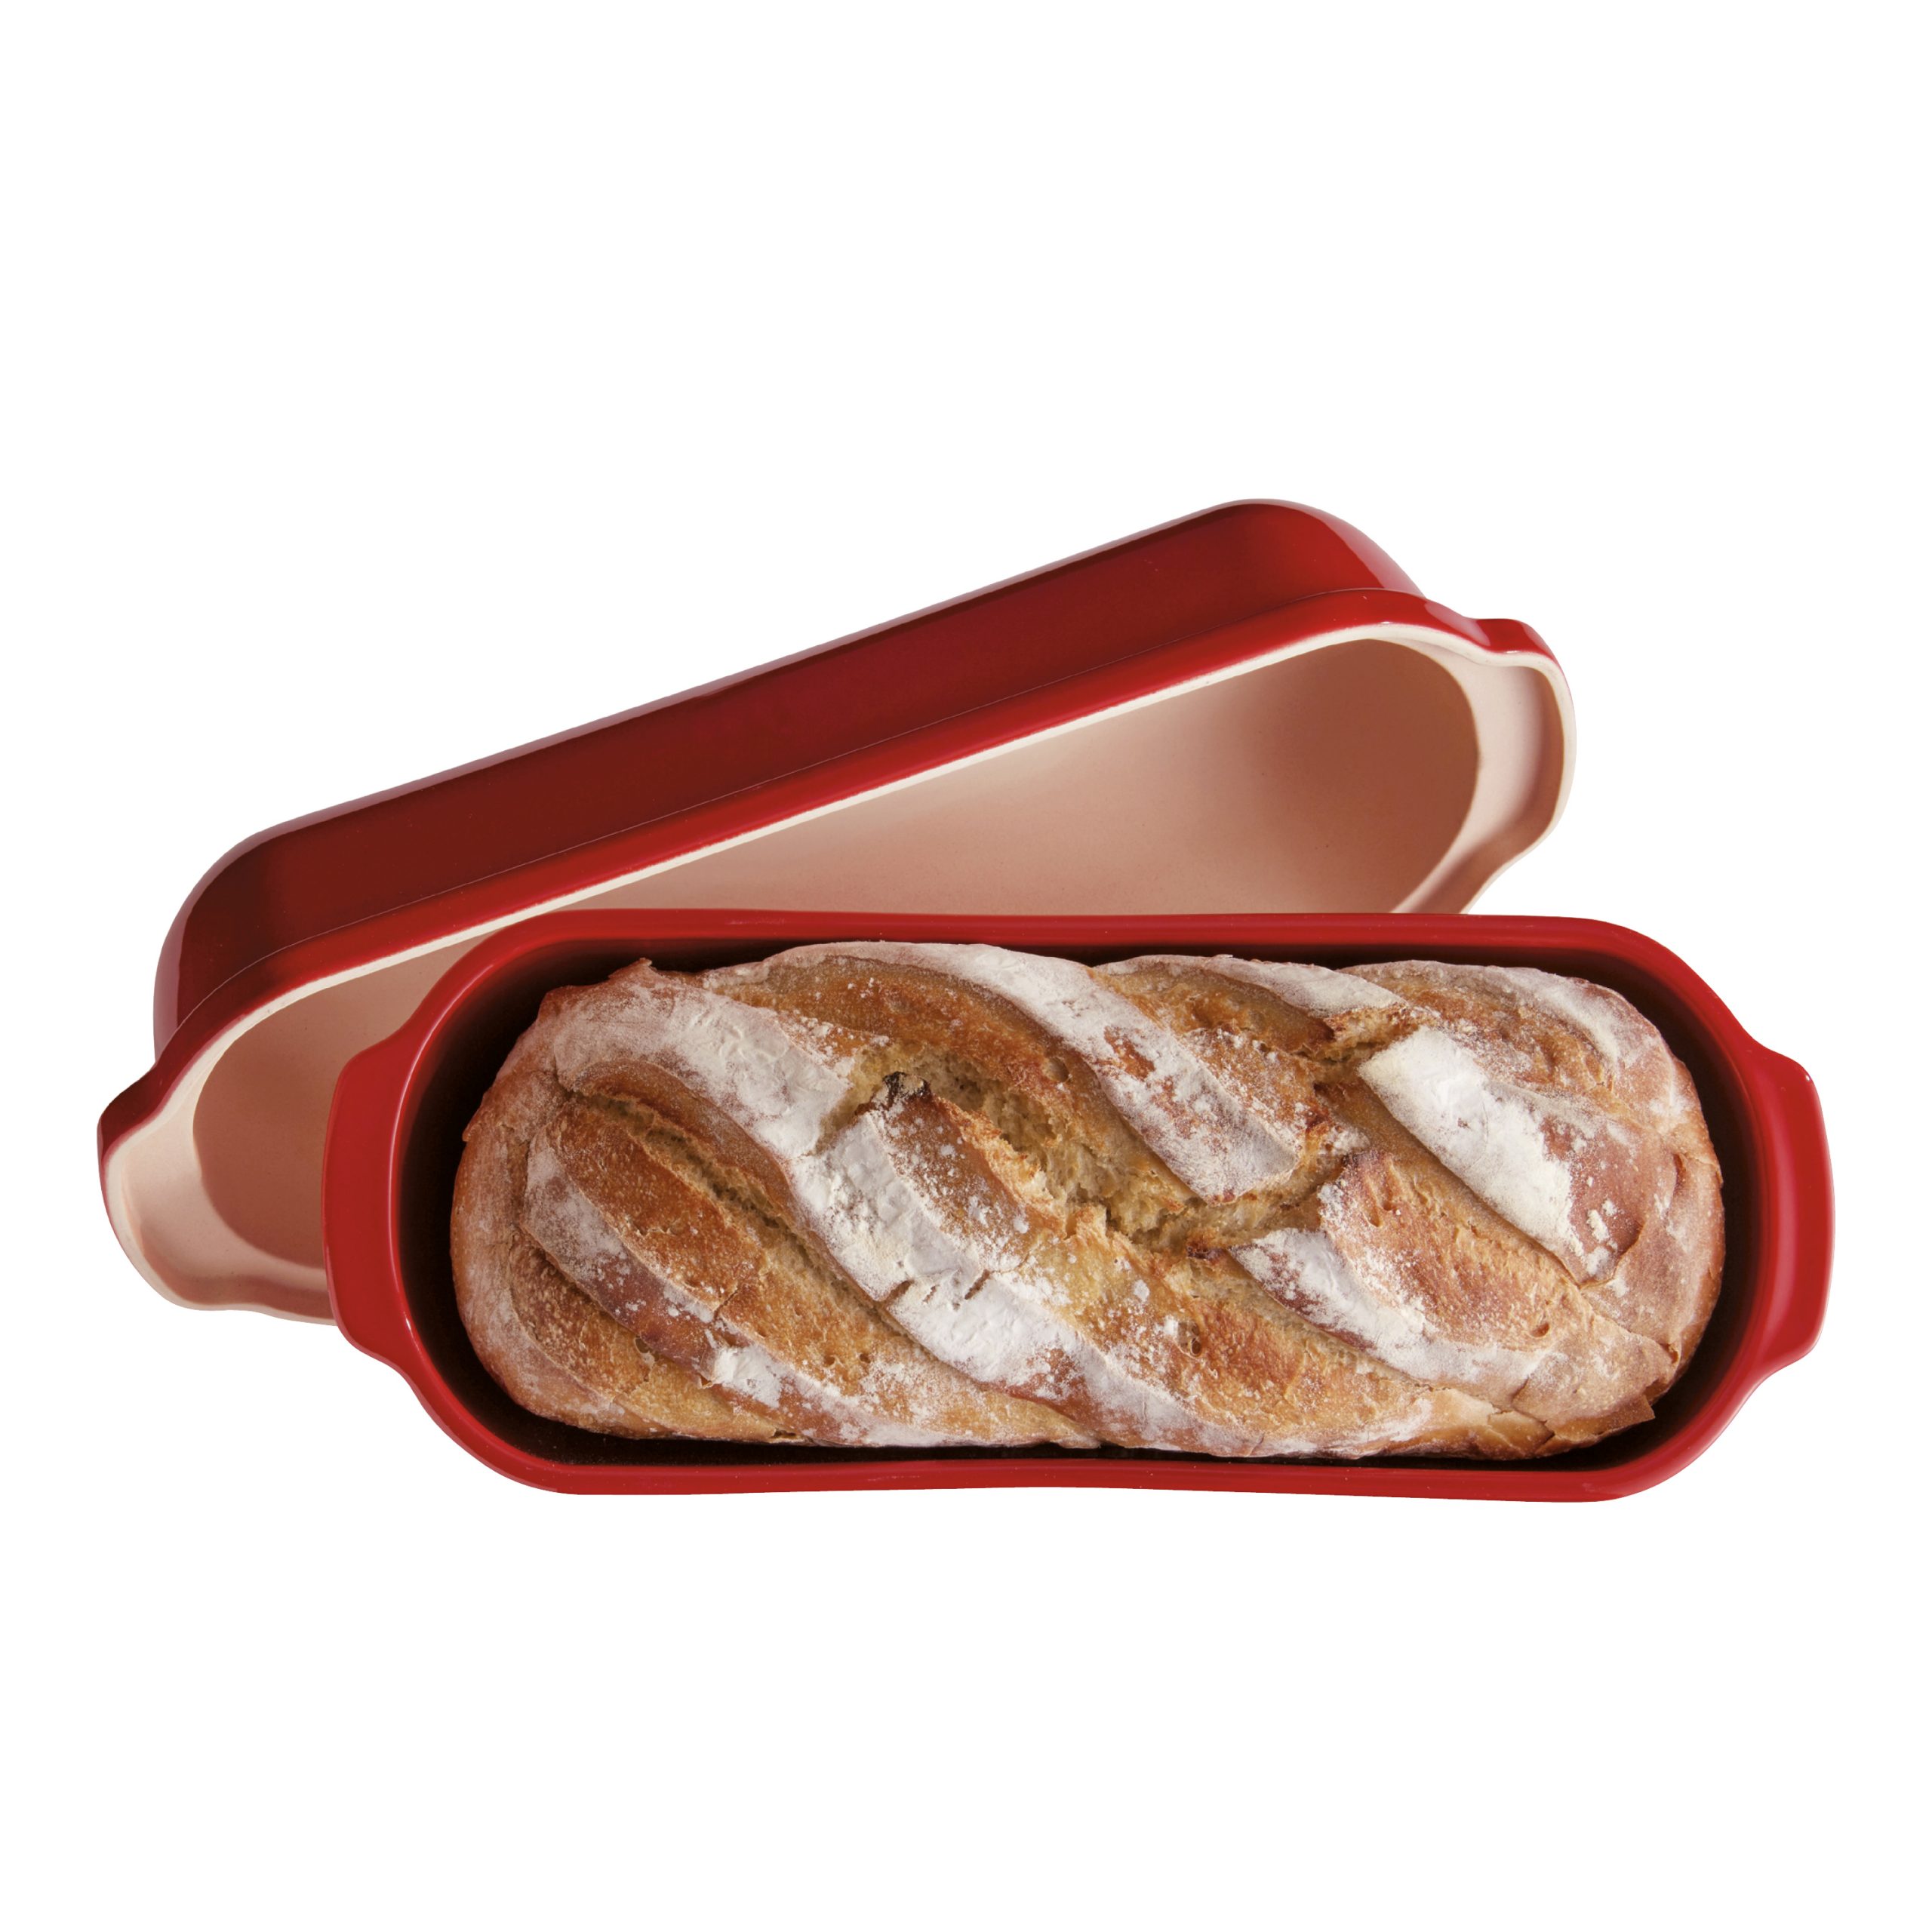 https://priscillamartel.com/wp-content/uploads/2022/02/345503-Italian-Loaf-Baker-LS-4-copy-2-scaled.jpg